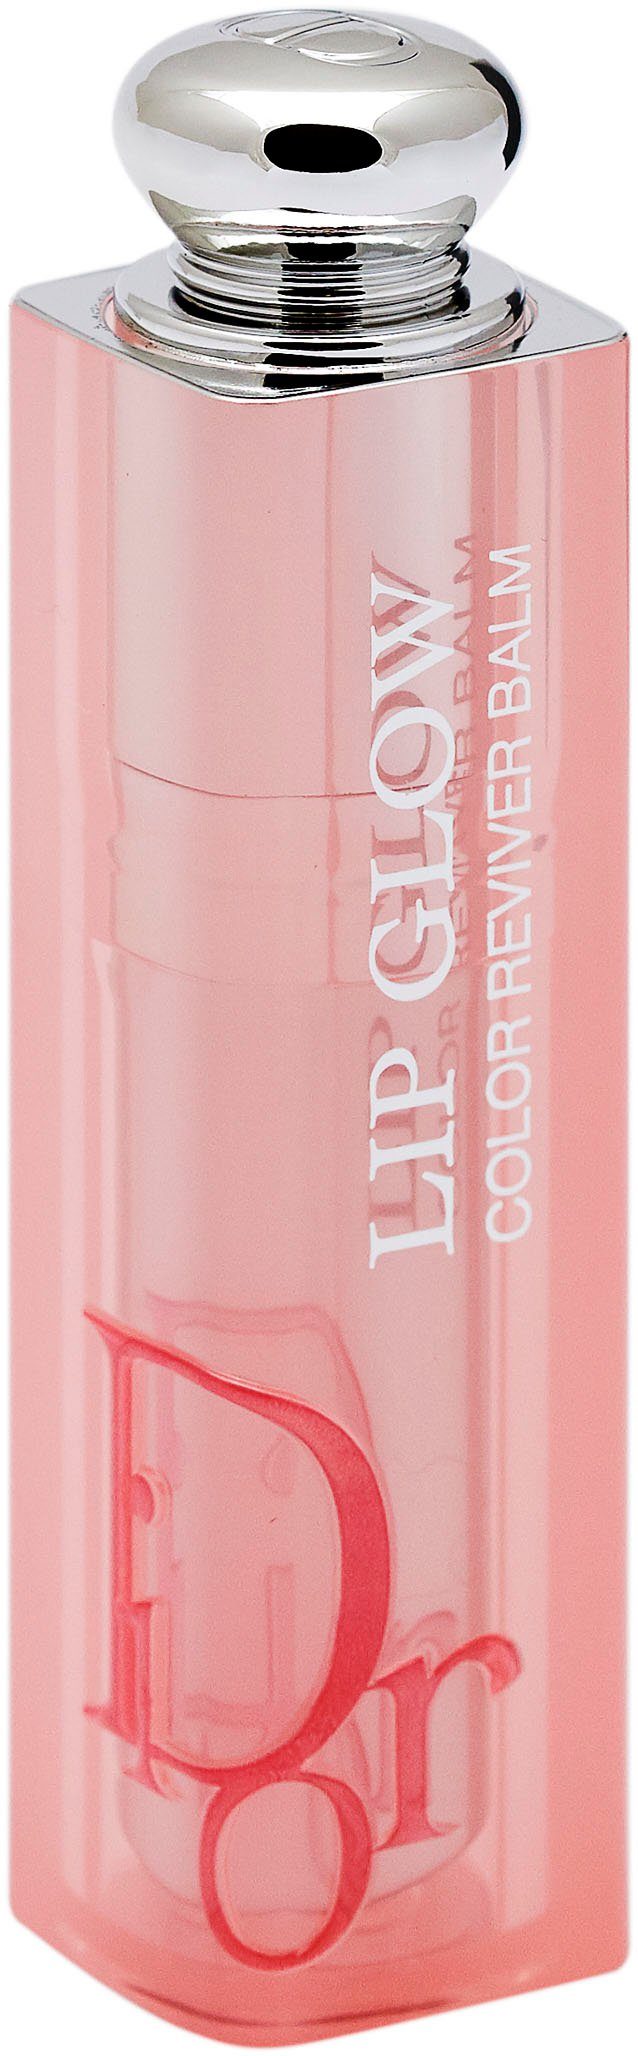 Dior Dior Pink Lippenbalsam Addict 001 Lip Glow